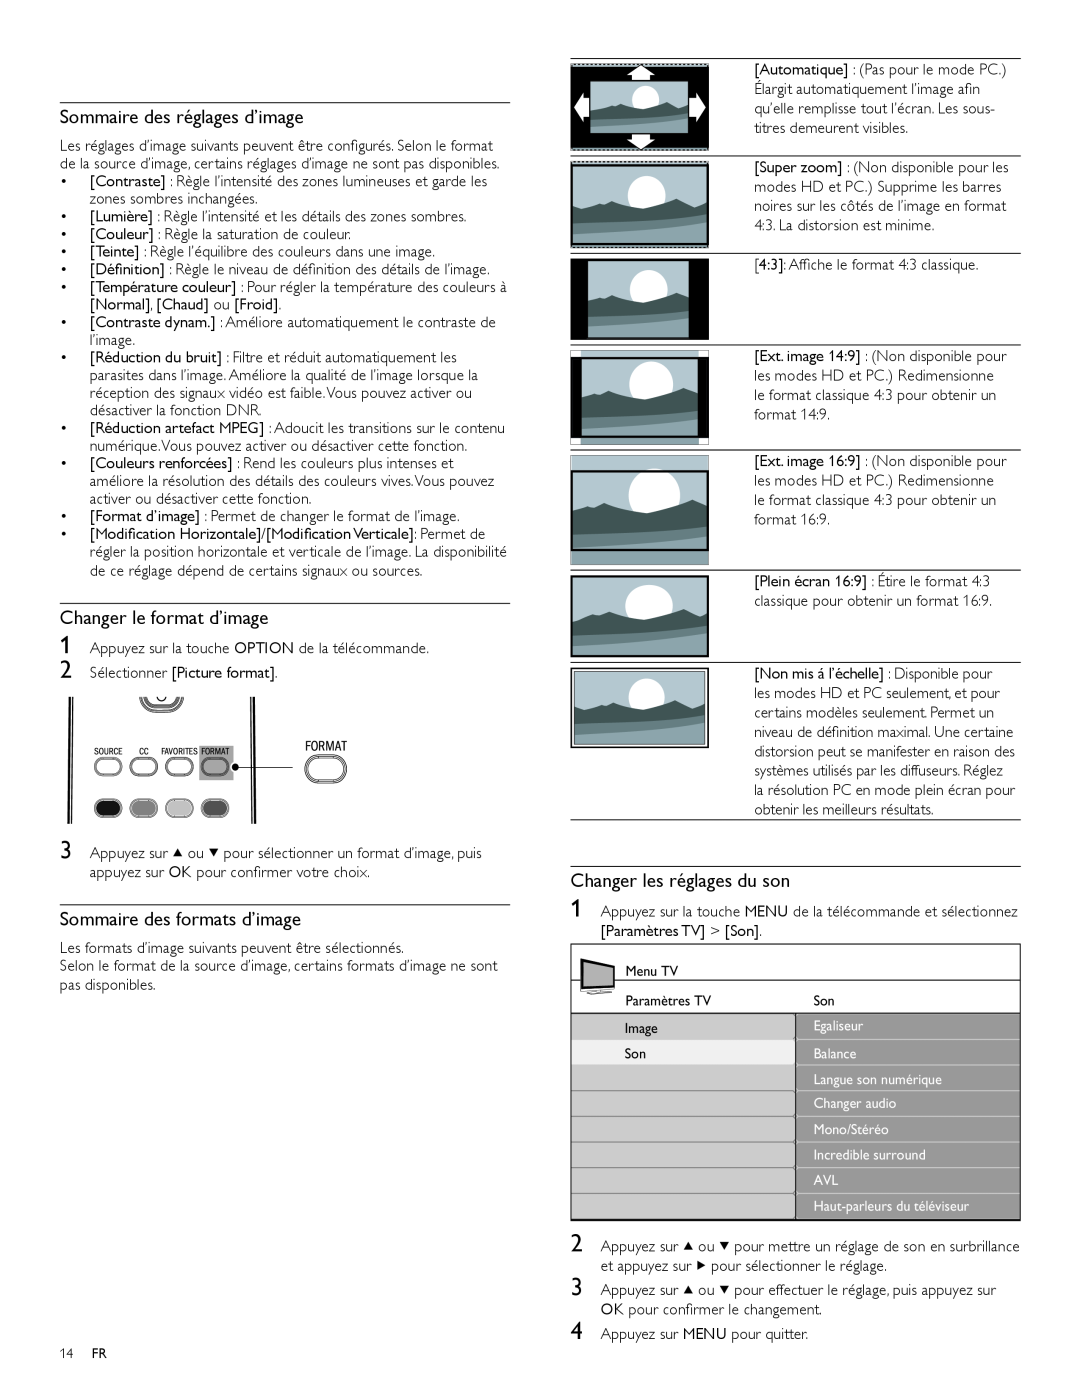 Magnavox 47MF439B user manual Sommaire des réglages d’image, Changer le format d’image, Sommaire des formats d’image 